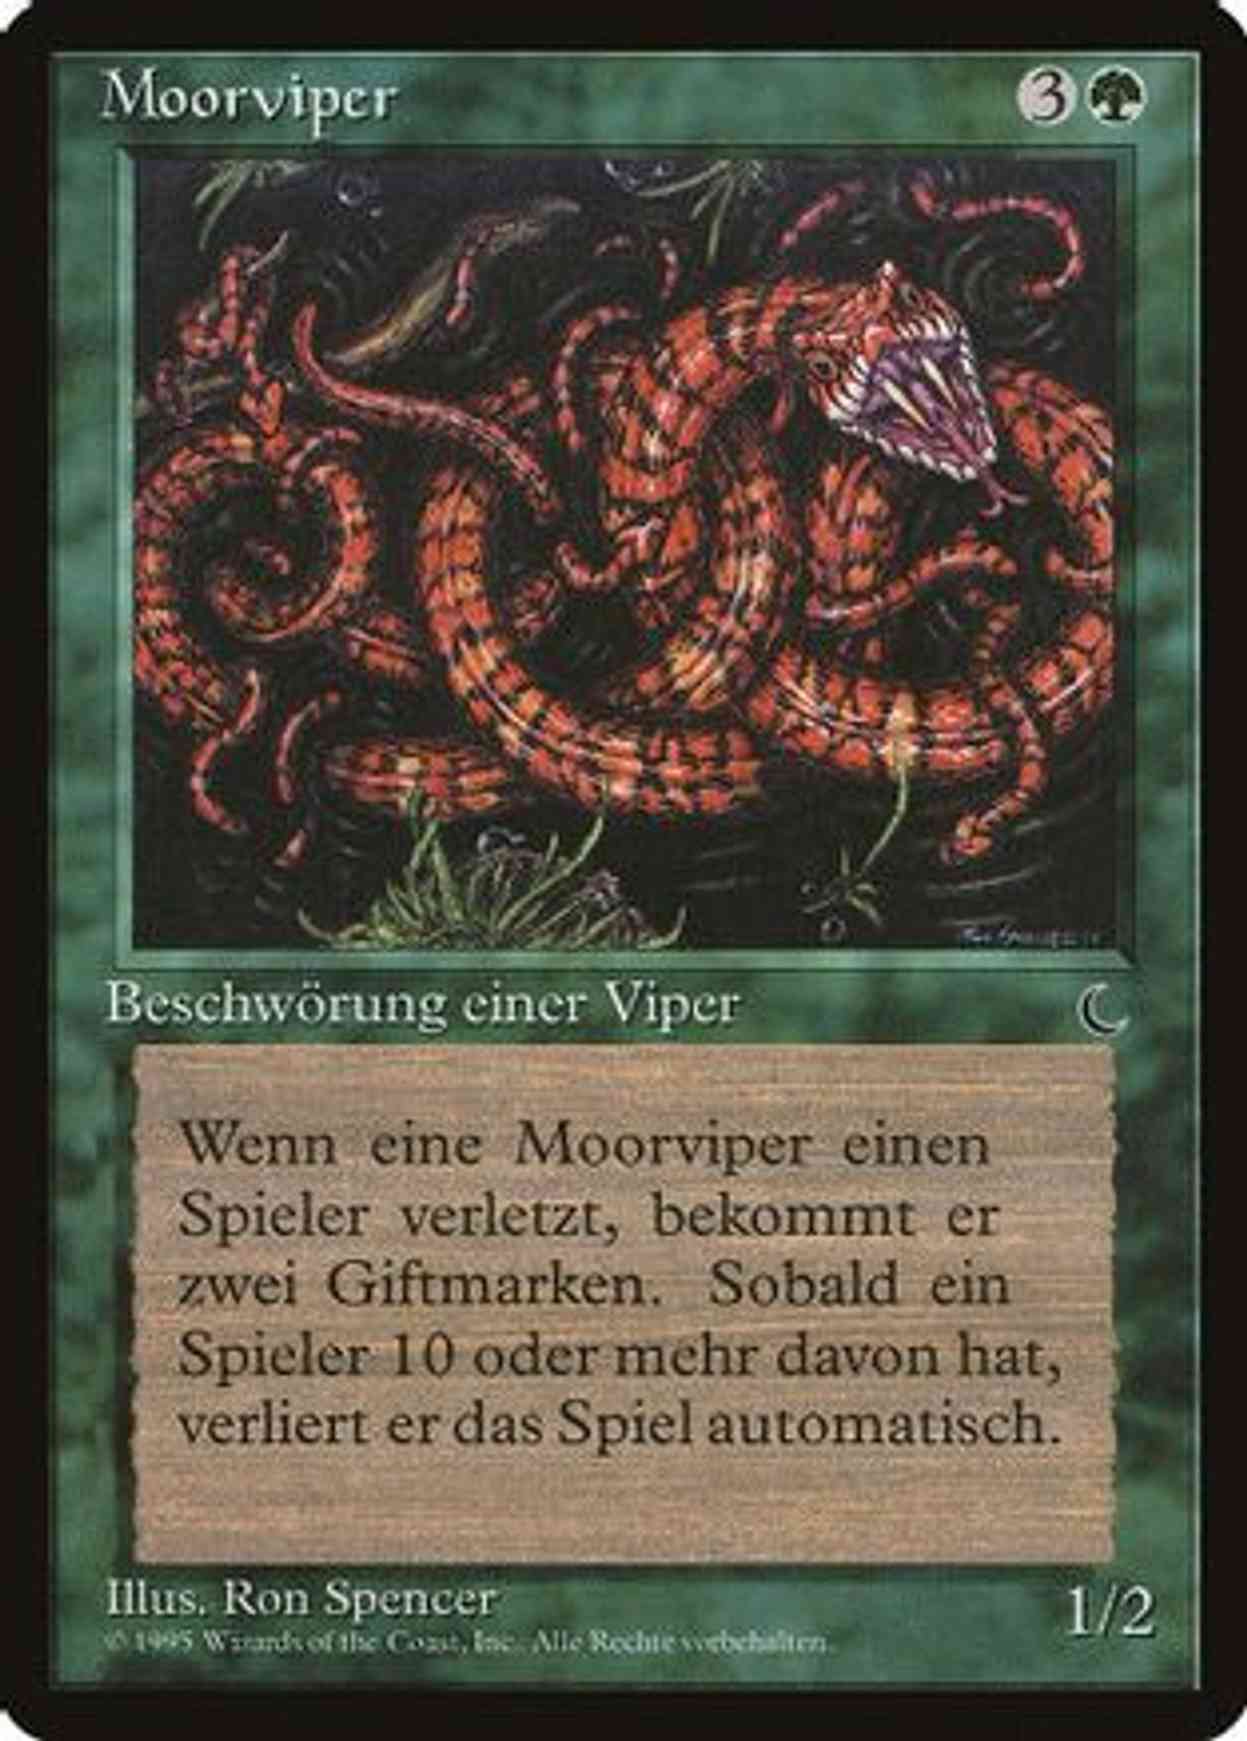 Marsh Viper (German) - "Moorviper" magic card front